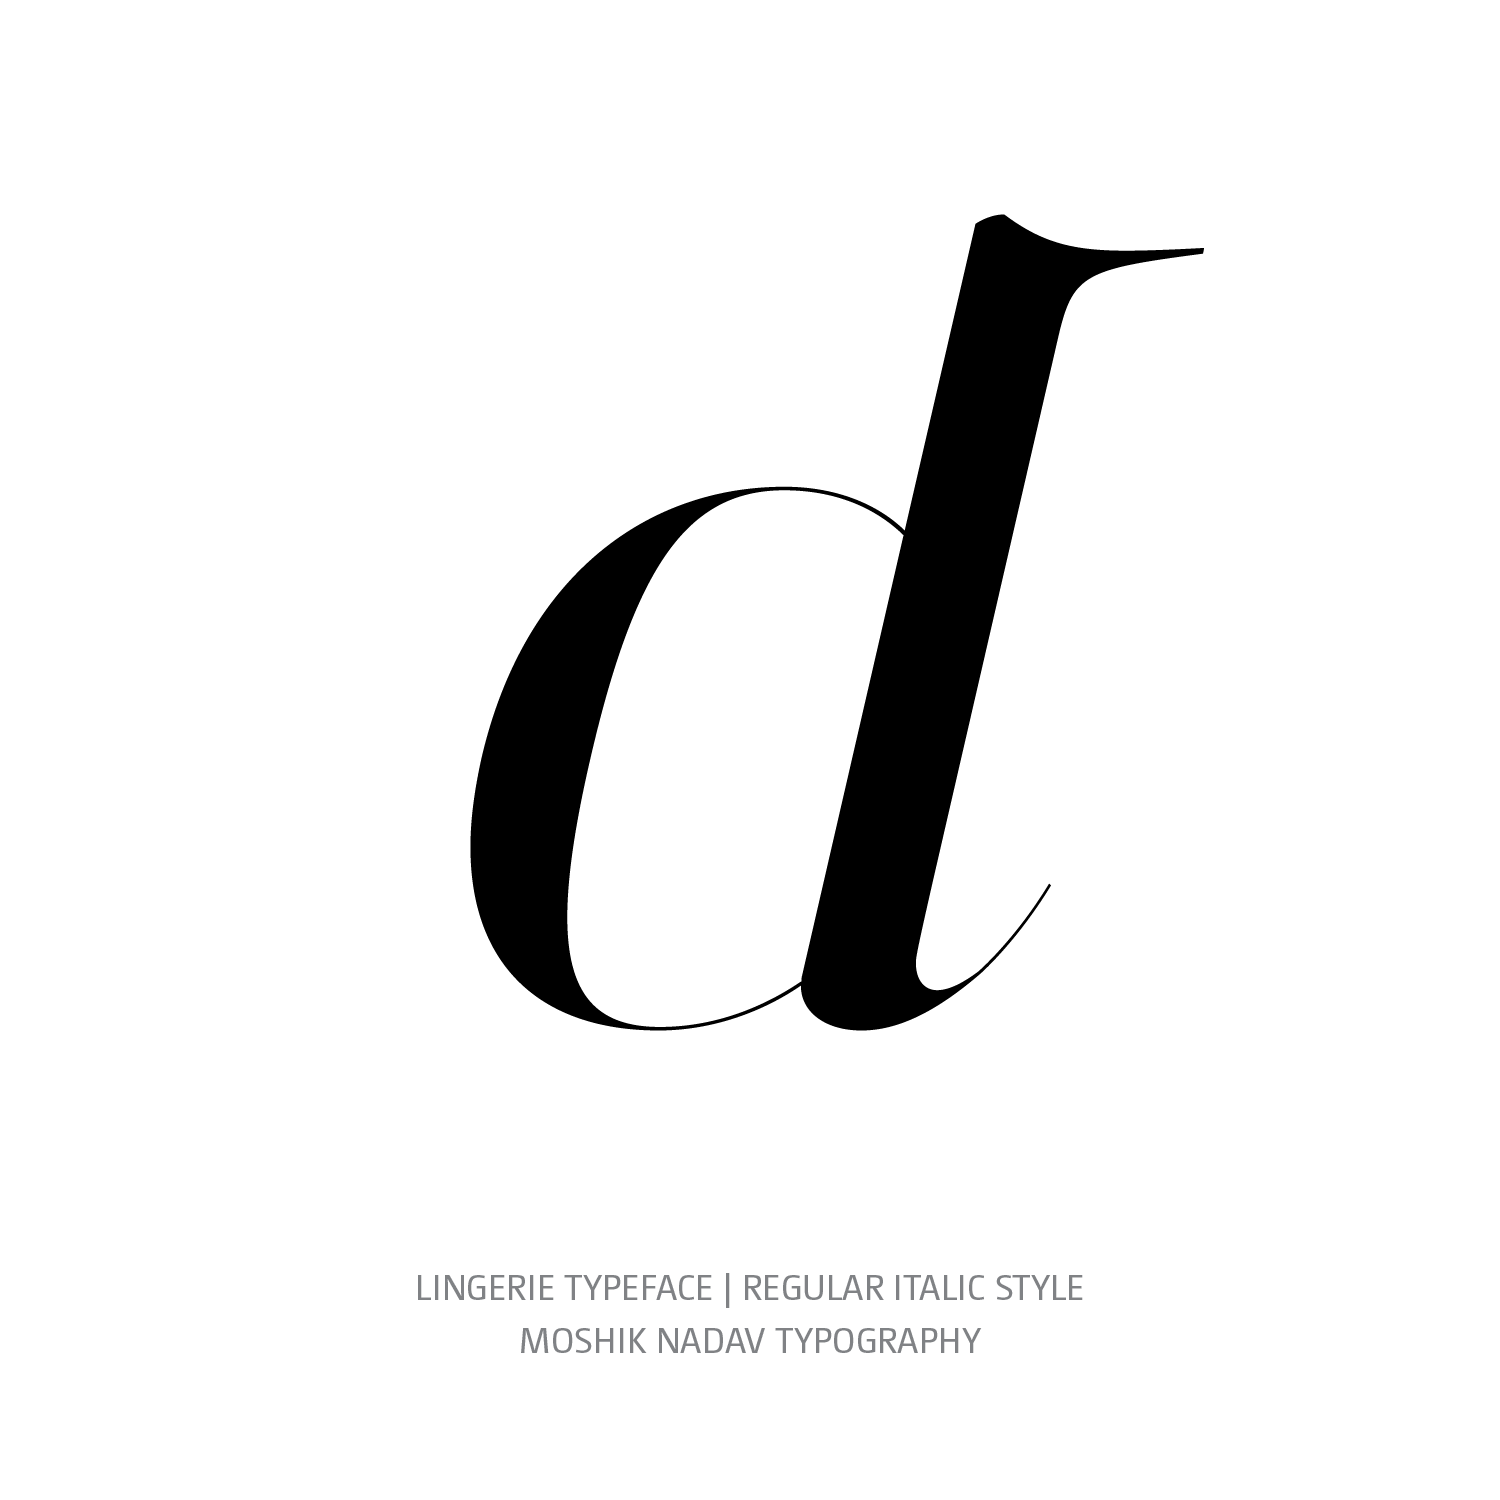 Lingerie Typeface Regular Italic d - Fashion fonts by Moshik Nadav Typography